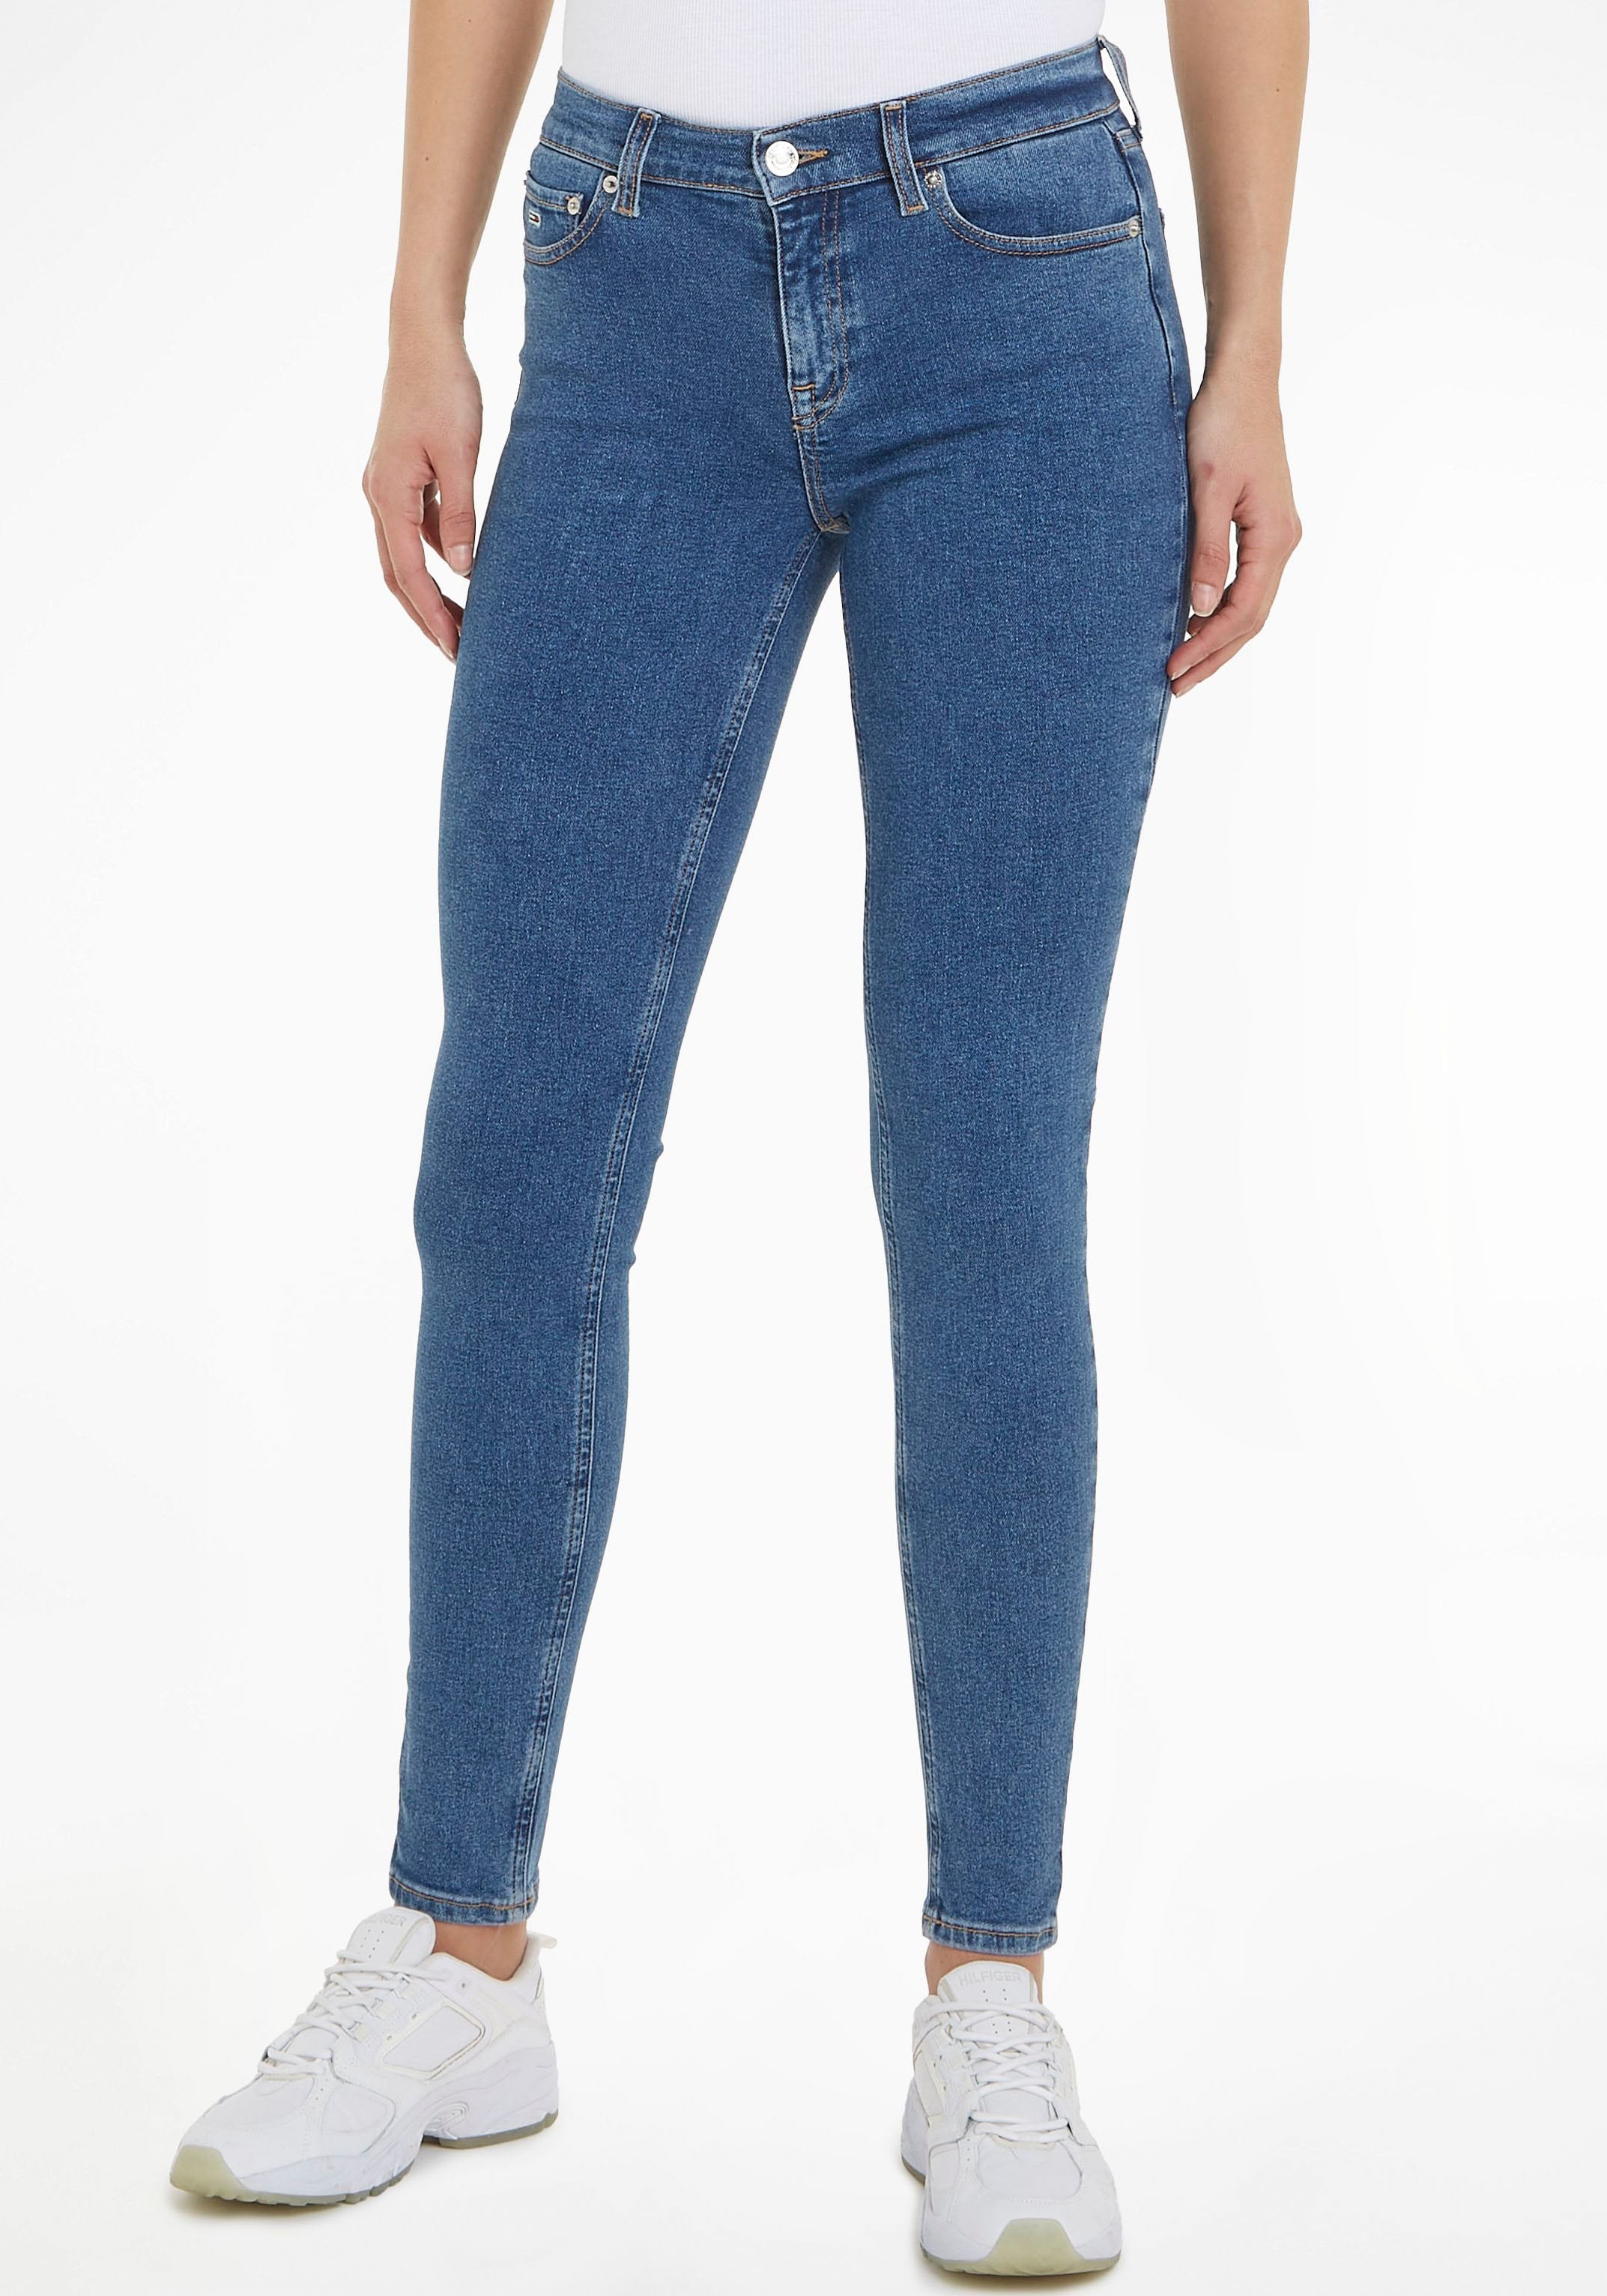 Tommy Jeans Bequeme »Nora«, Online Ledermarkenlabel Jeans OTTO Shop im mit